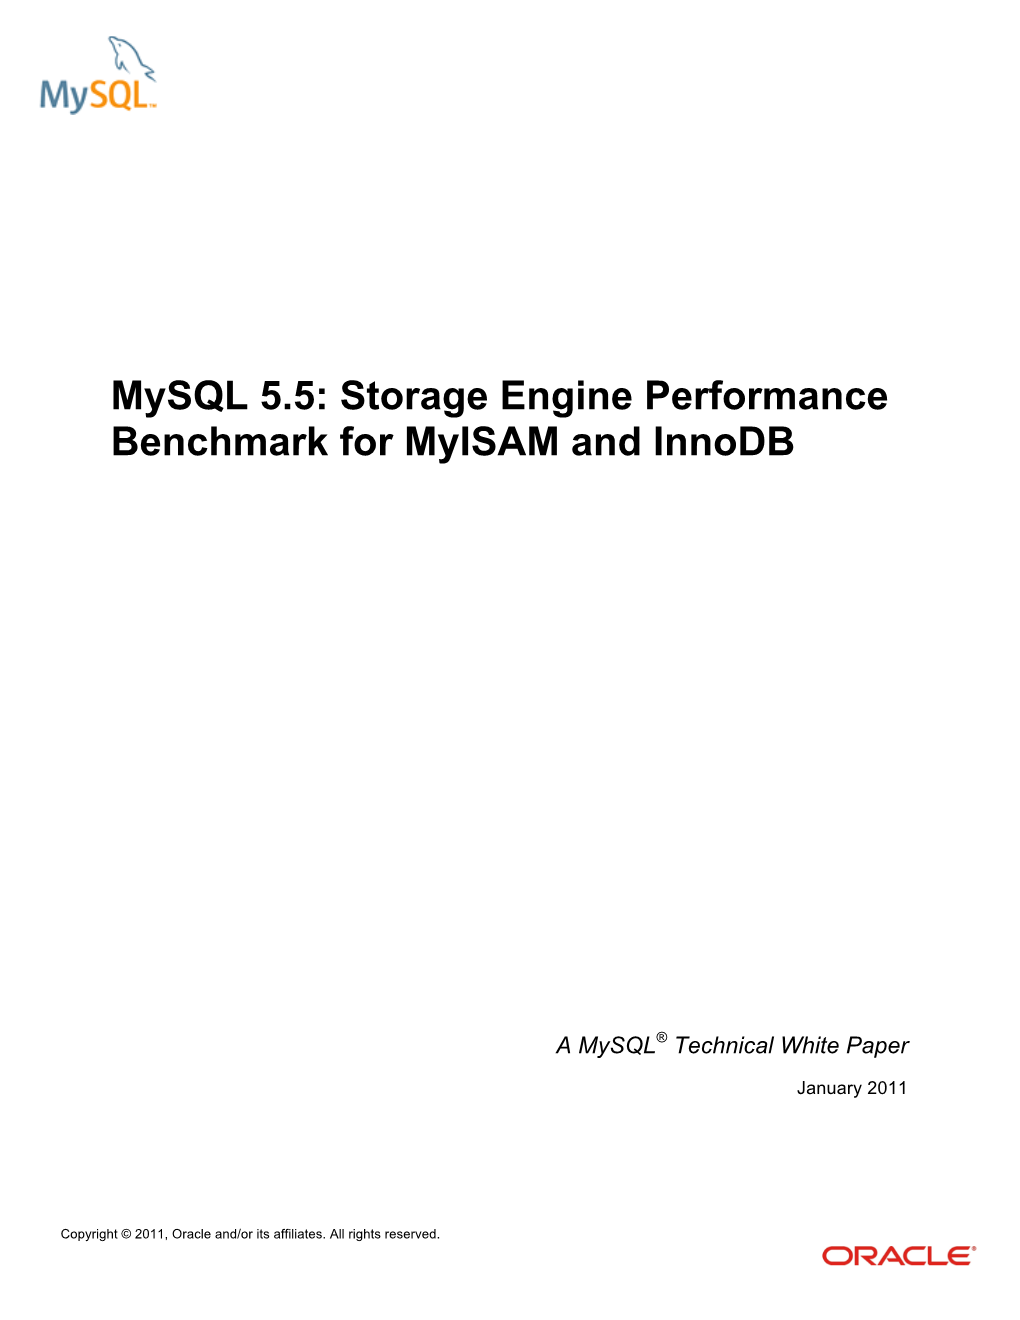 Mysql 5.5: Storage Engine Performance Benchmark for Myisam and Innodb